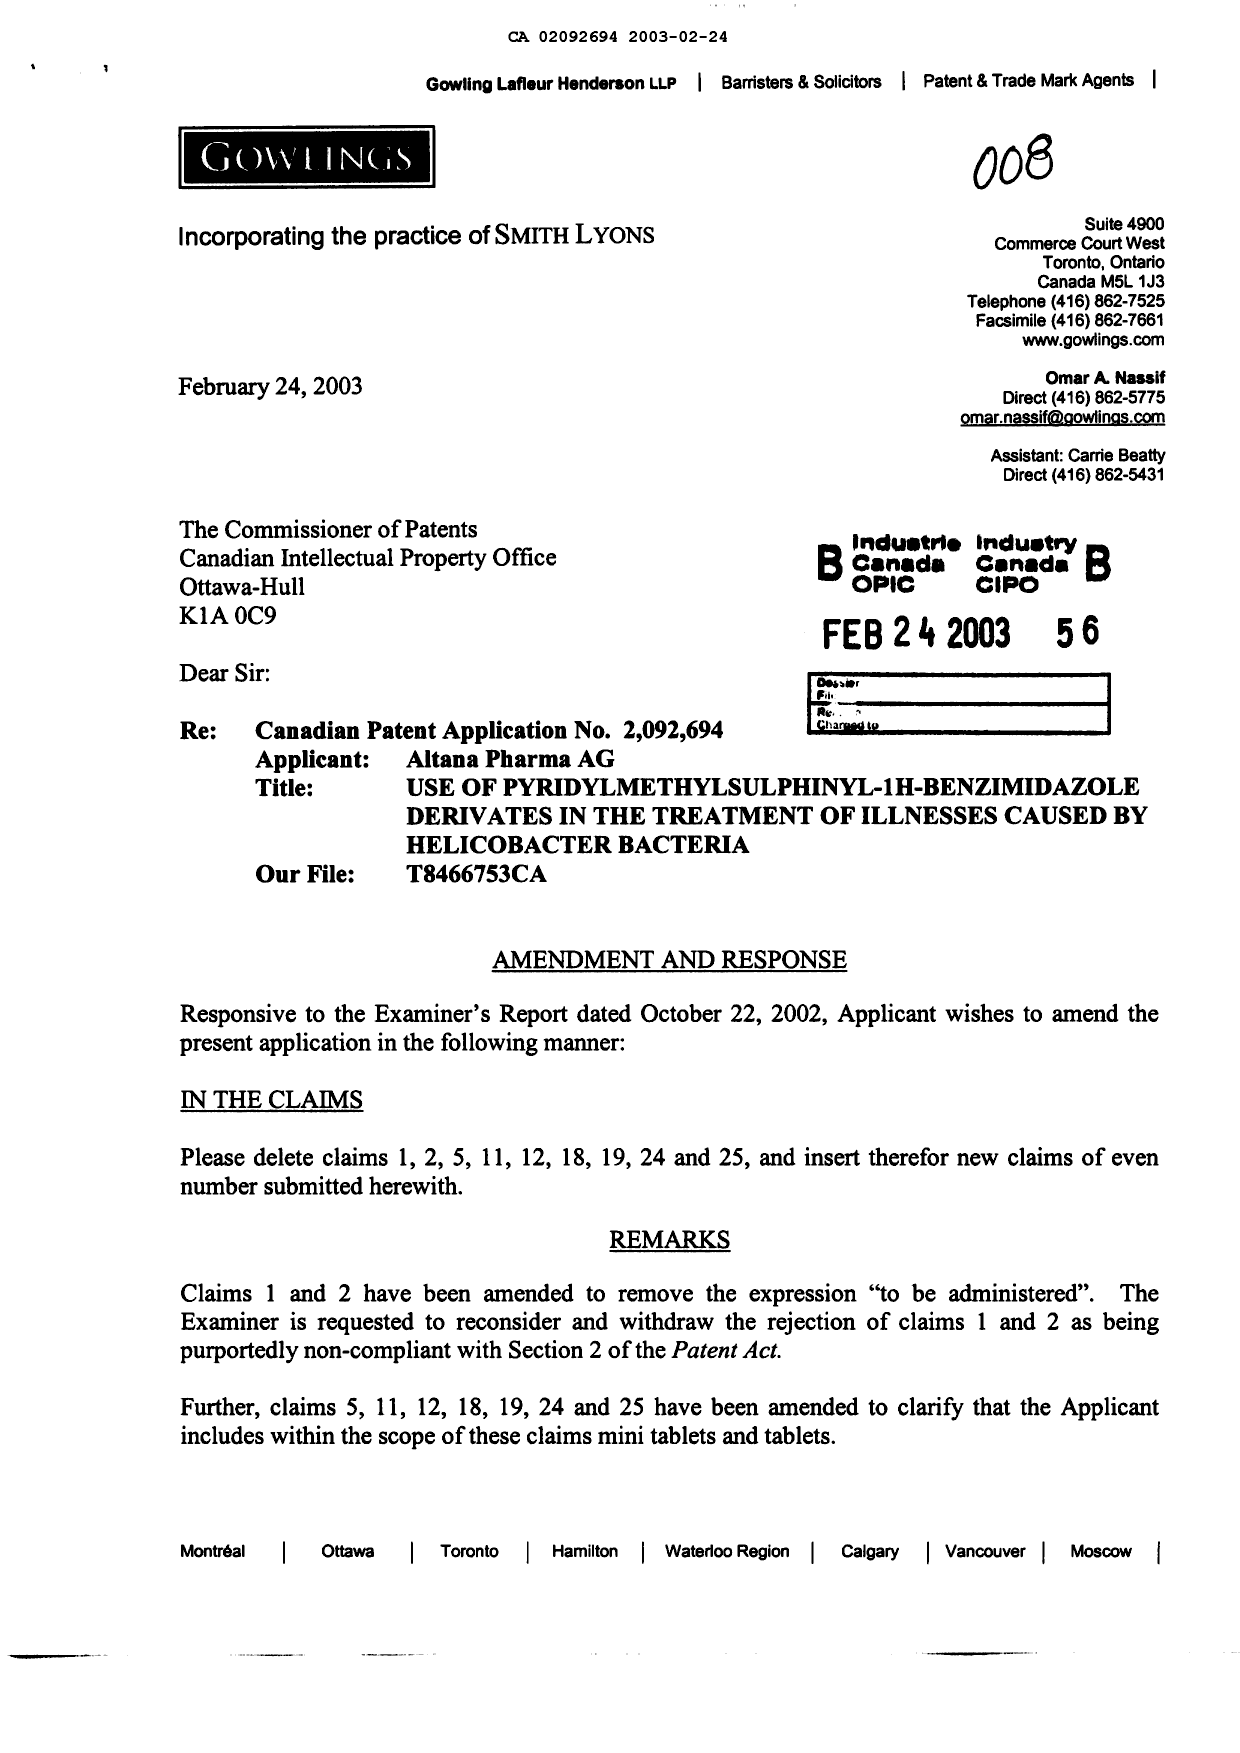 Canadian Patent Document 2092694. Prosecution-Amendment 20021224. Image 1 of 6